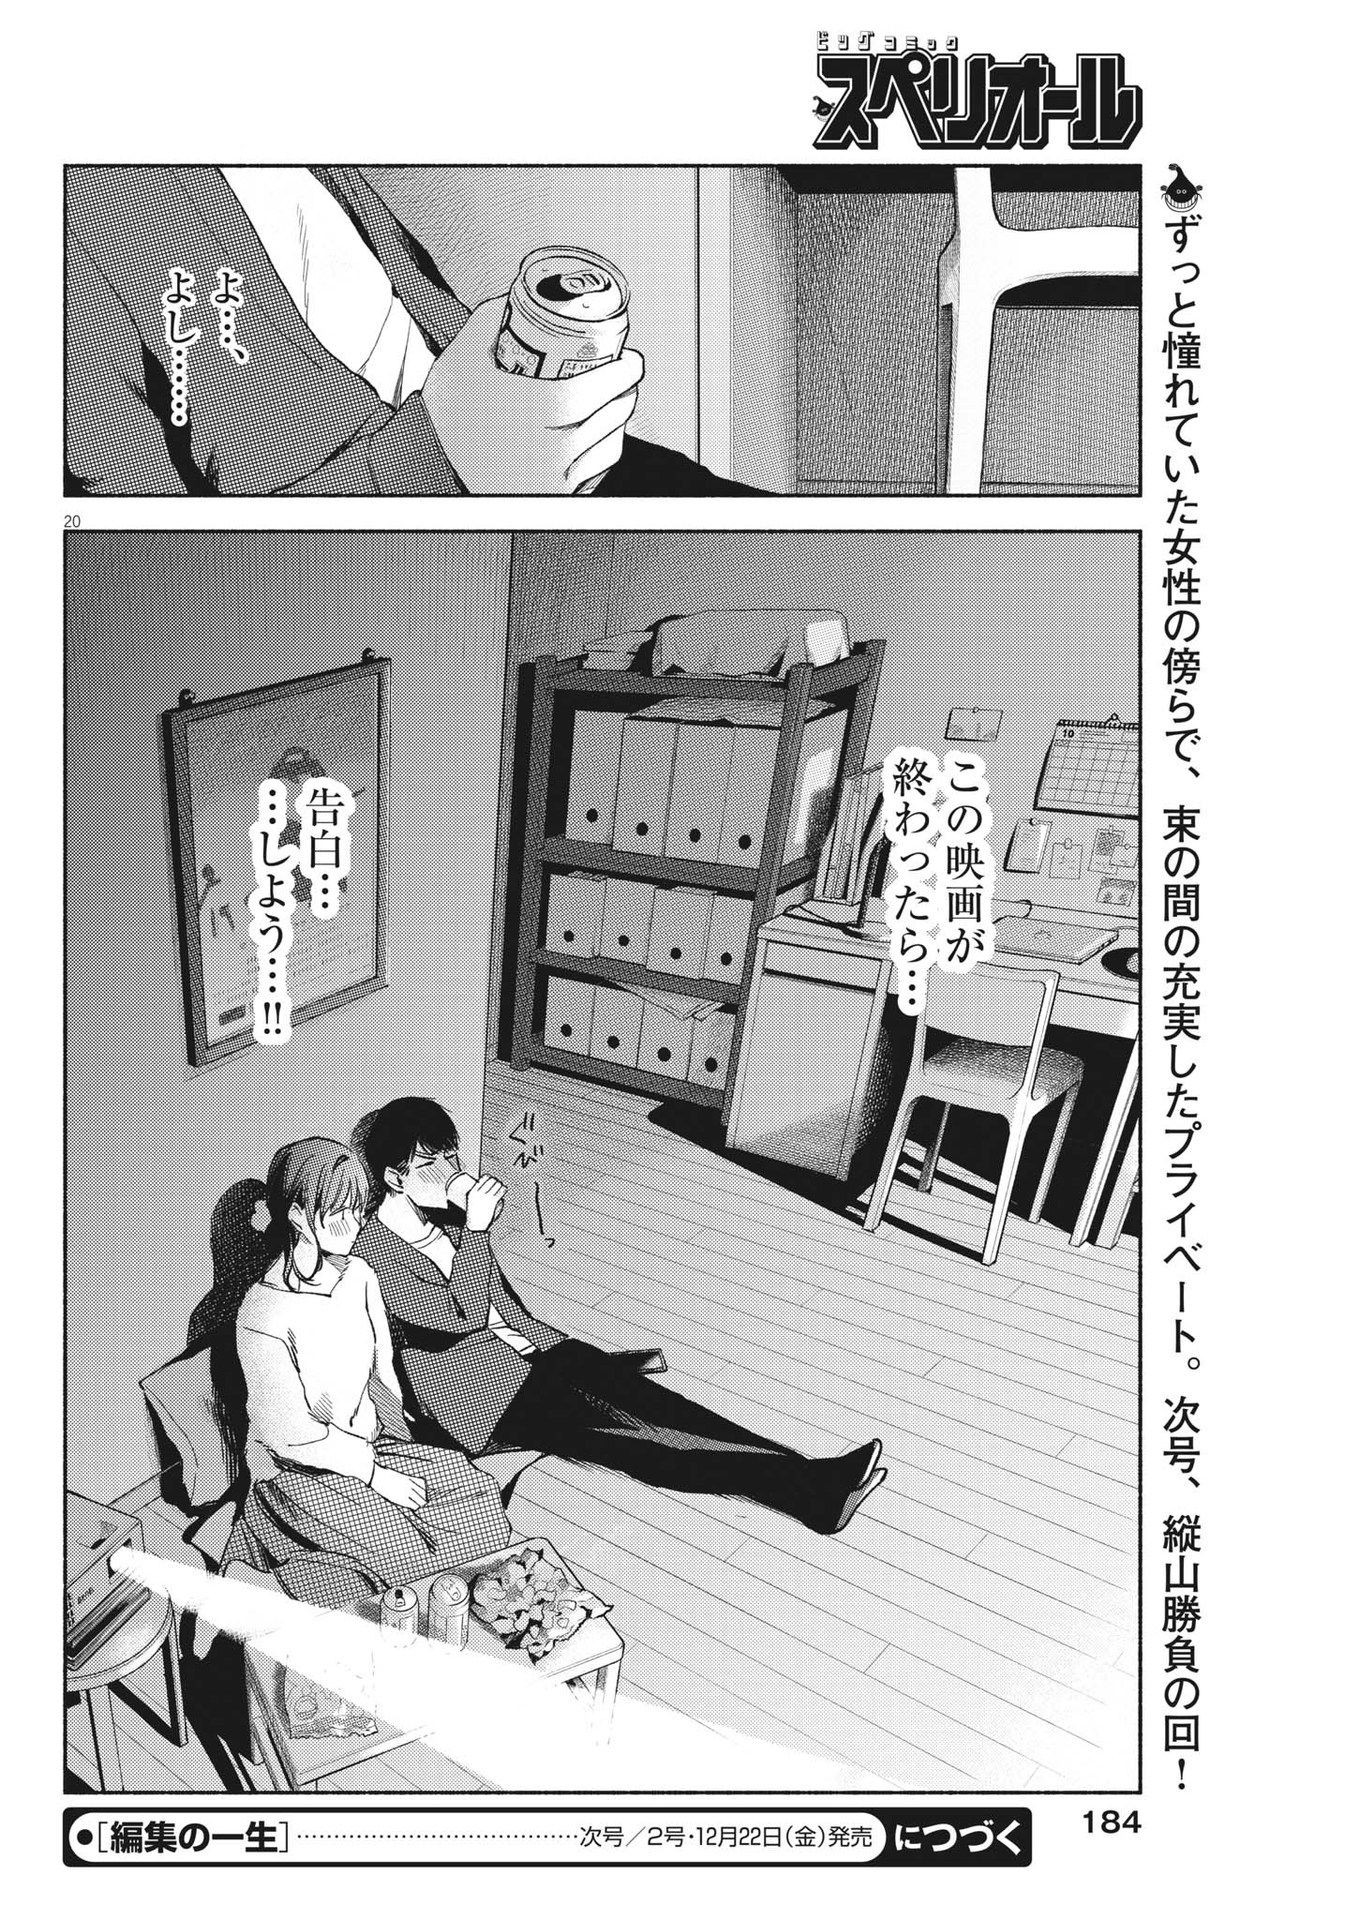 Henshuu no Isshou - Chapter 14 - Page 20